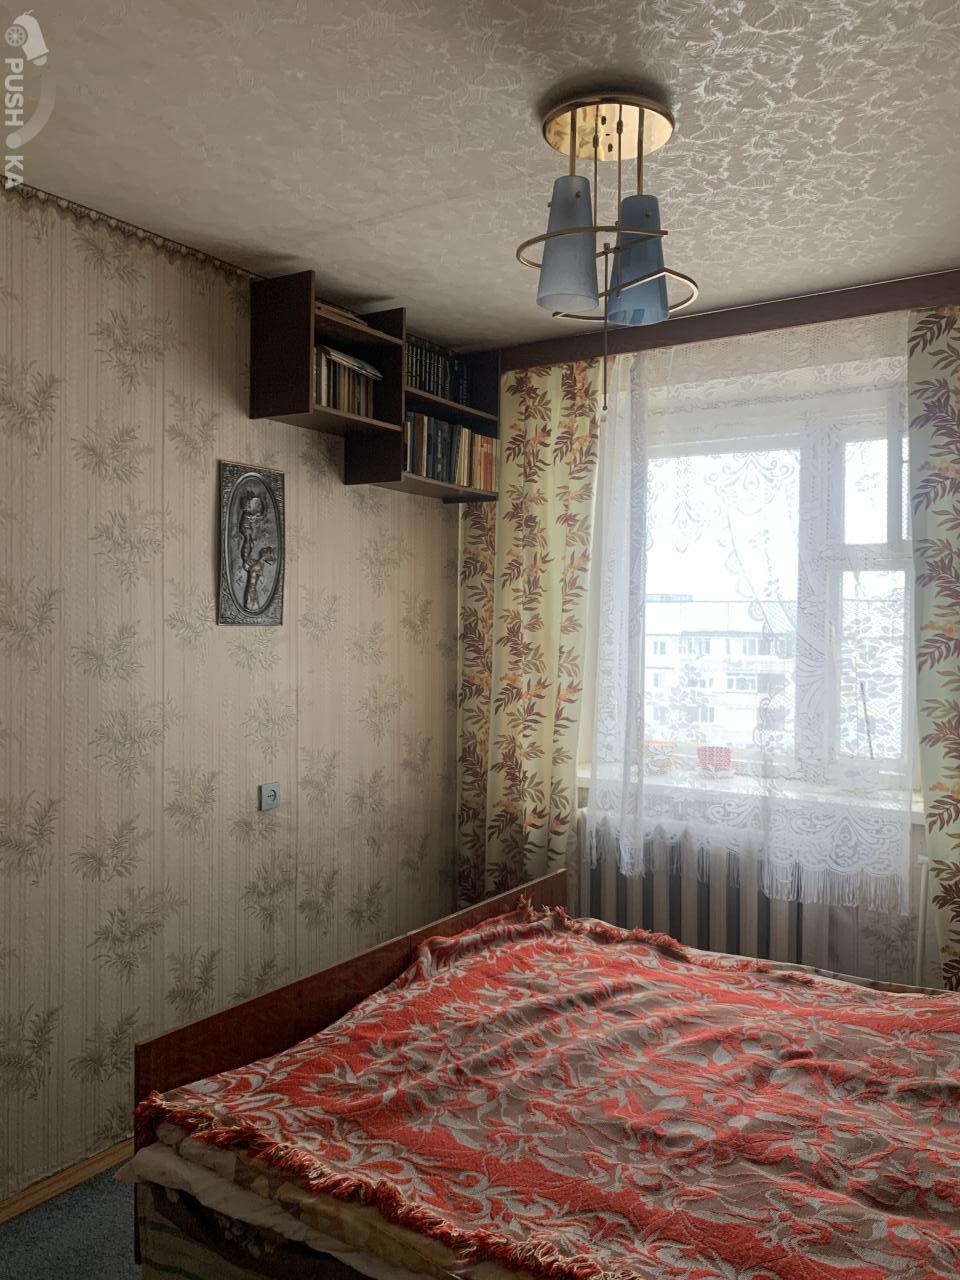 Продаётся 3-комнатная квартира 60.0 кв.м. этаж 10/10 за 3 000 000 руб 